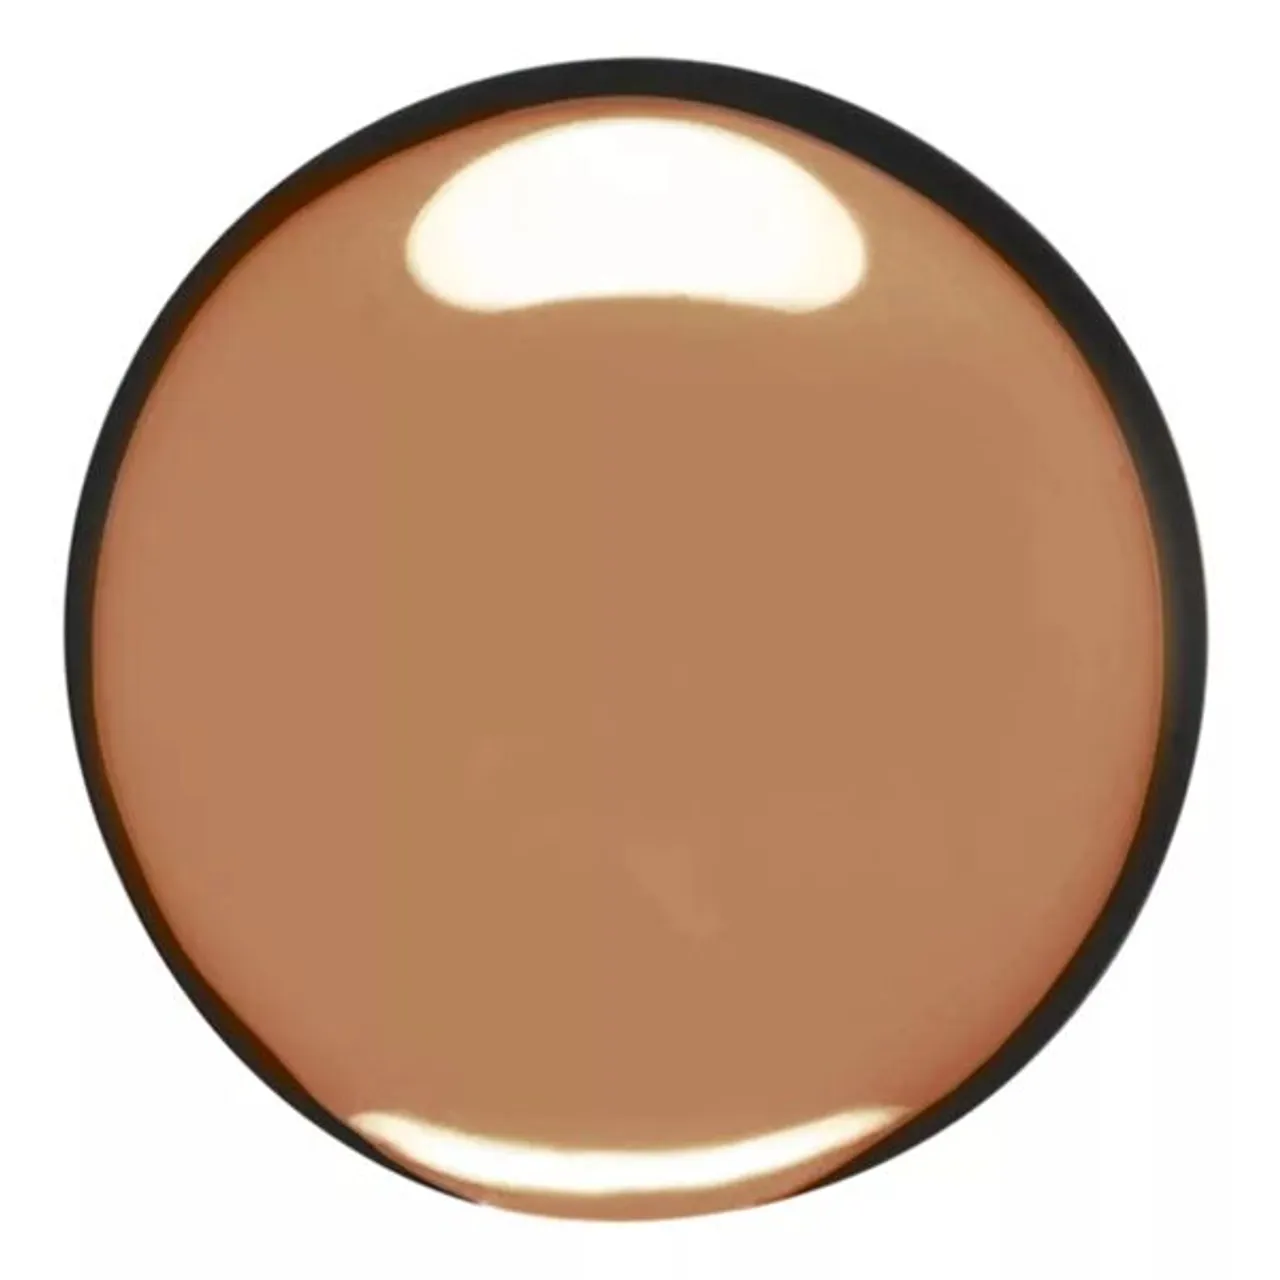 Clarins Skin Illusion Foundation SPF 15 - 115 Cognac - Unisex - Size: 30ml